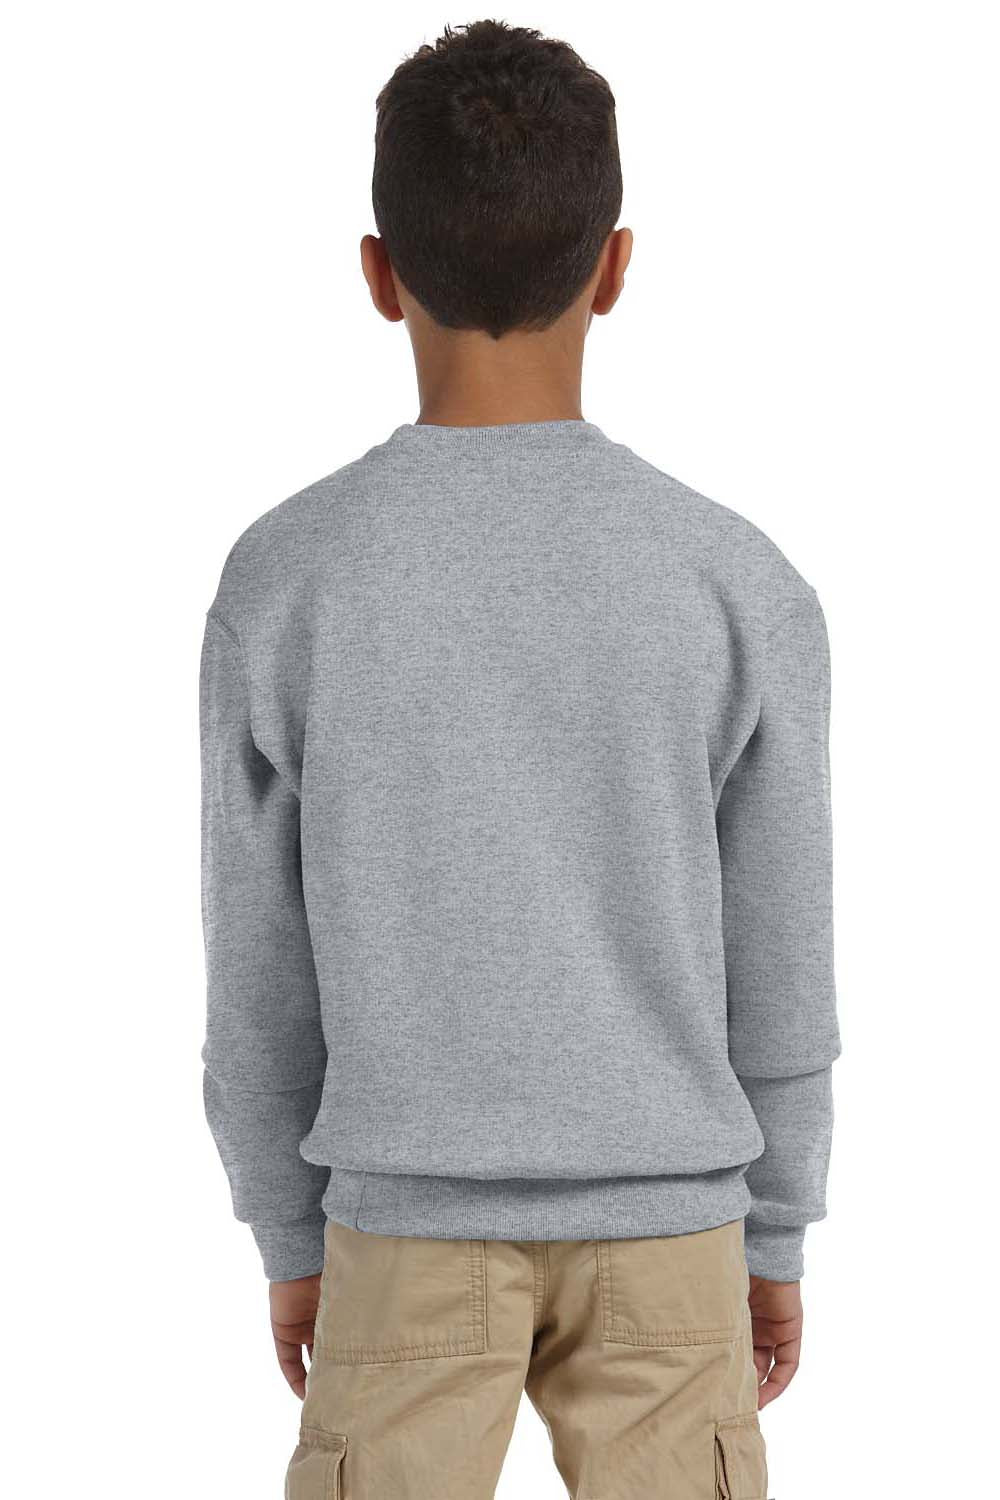 Jerzees 562B Youth NuBlend Fleece Crewneck Sweatshirt Oxford Grey Back